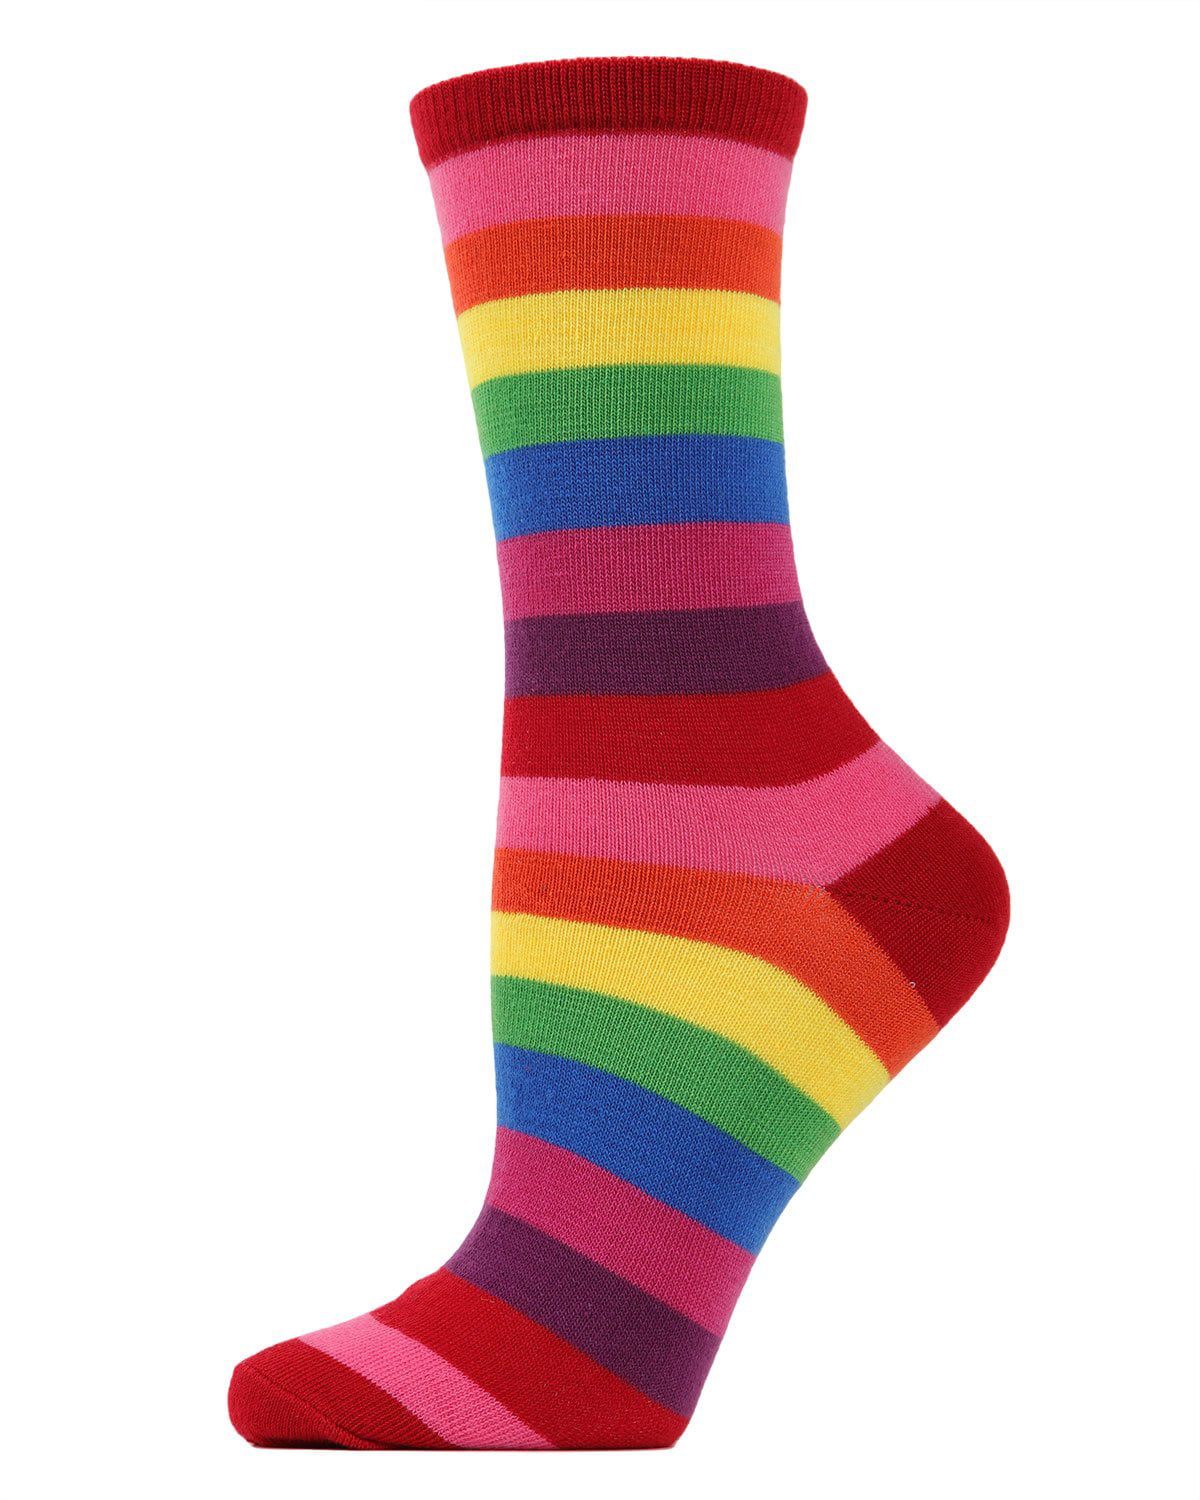 MeMoi - MeMoi Rainbow Stripe Crew Socks 9-11 / Multi - Walmart.com ...